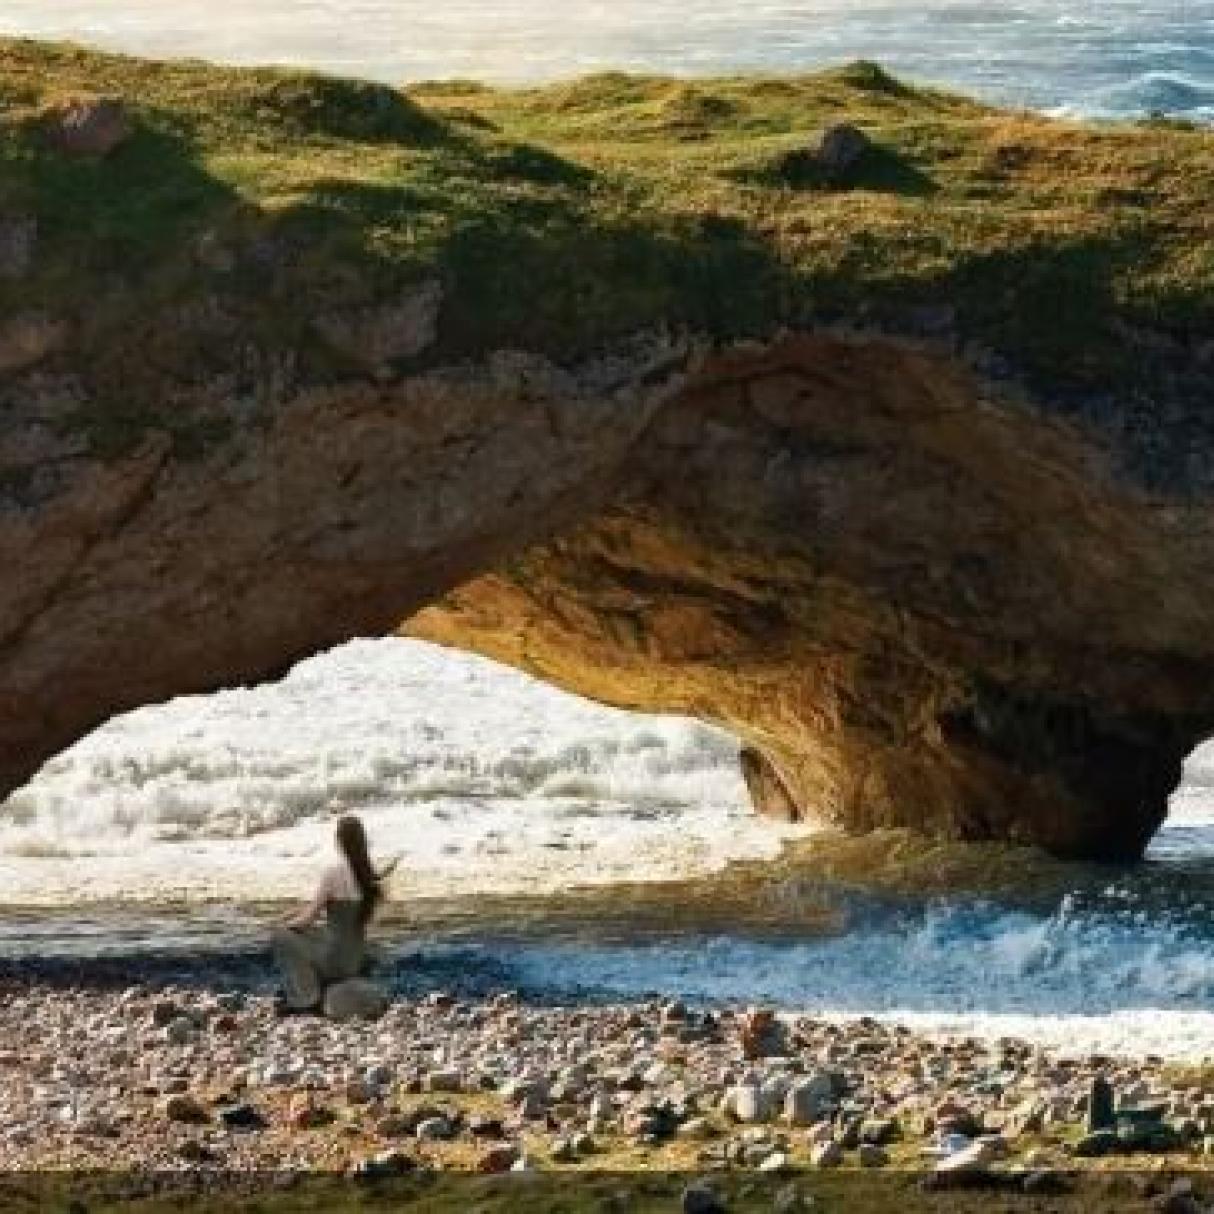 A person on the beach beneath unusual rock arches